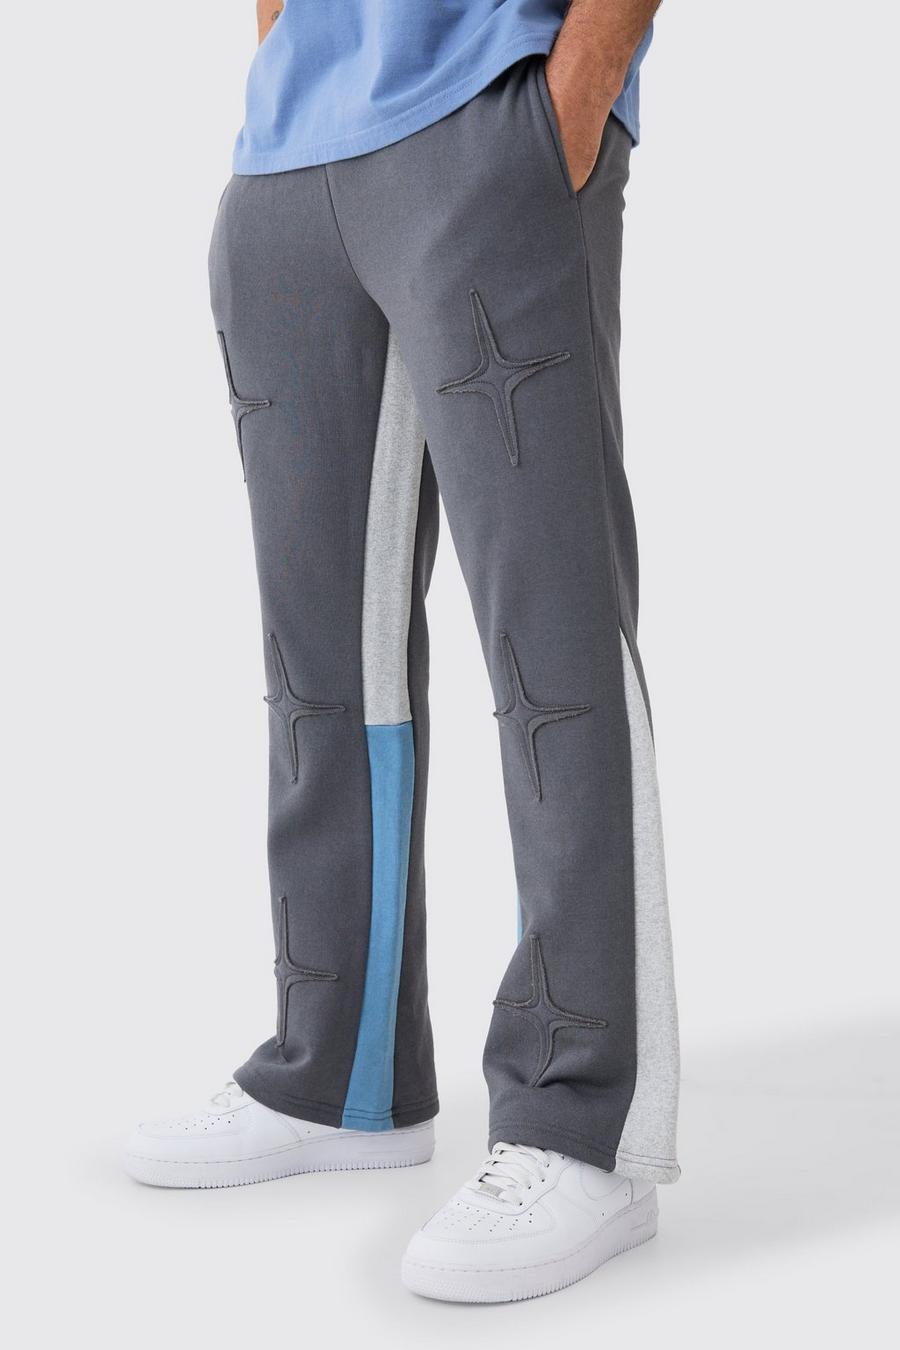 Pantalón deportivo Regular con apliques y refuerzos, Charcoal